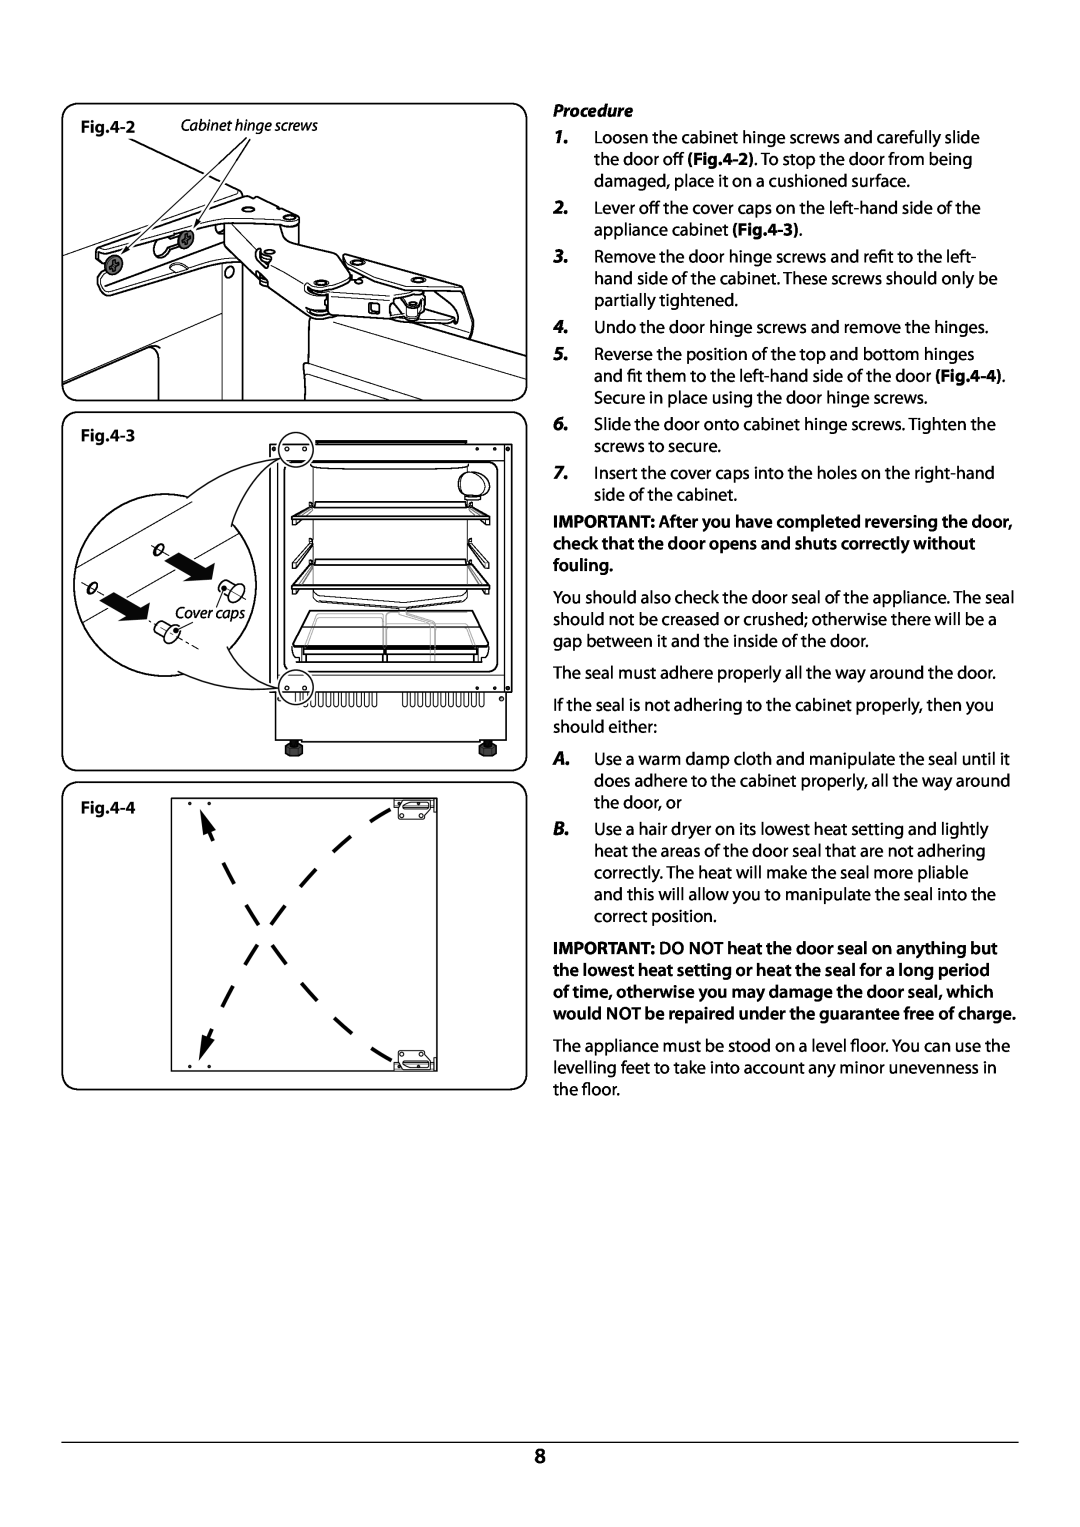 Rangemaster U110120 - 01A manual 3, 4, Procedure 